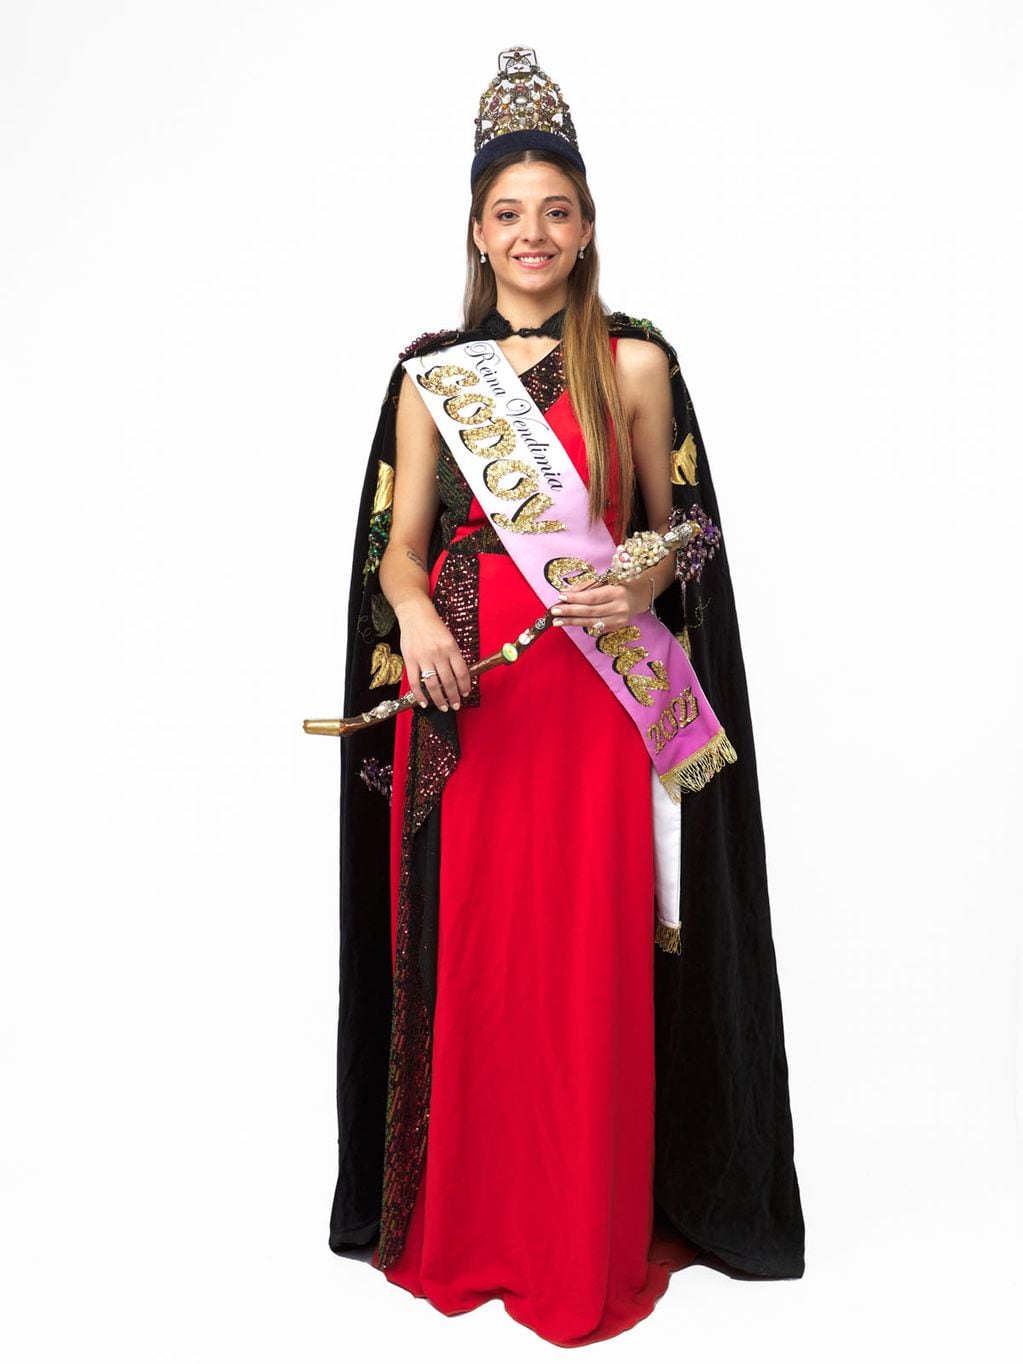 Mariana Gantus cuenta que desde muy chiquita soñaba con ser reina.